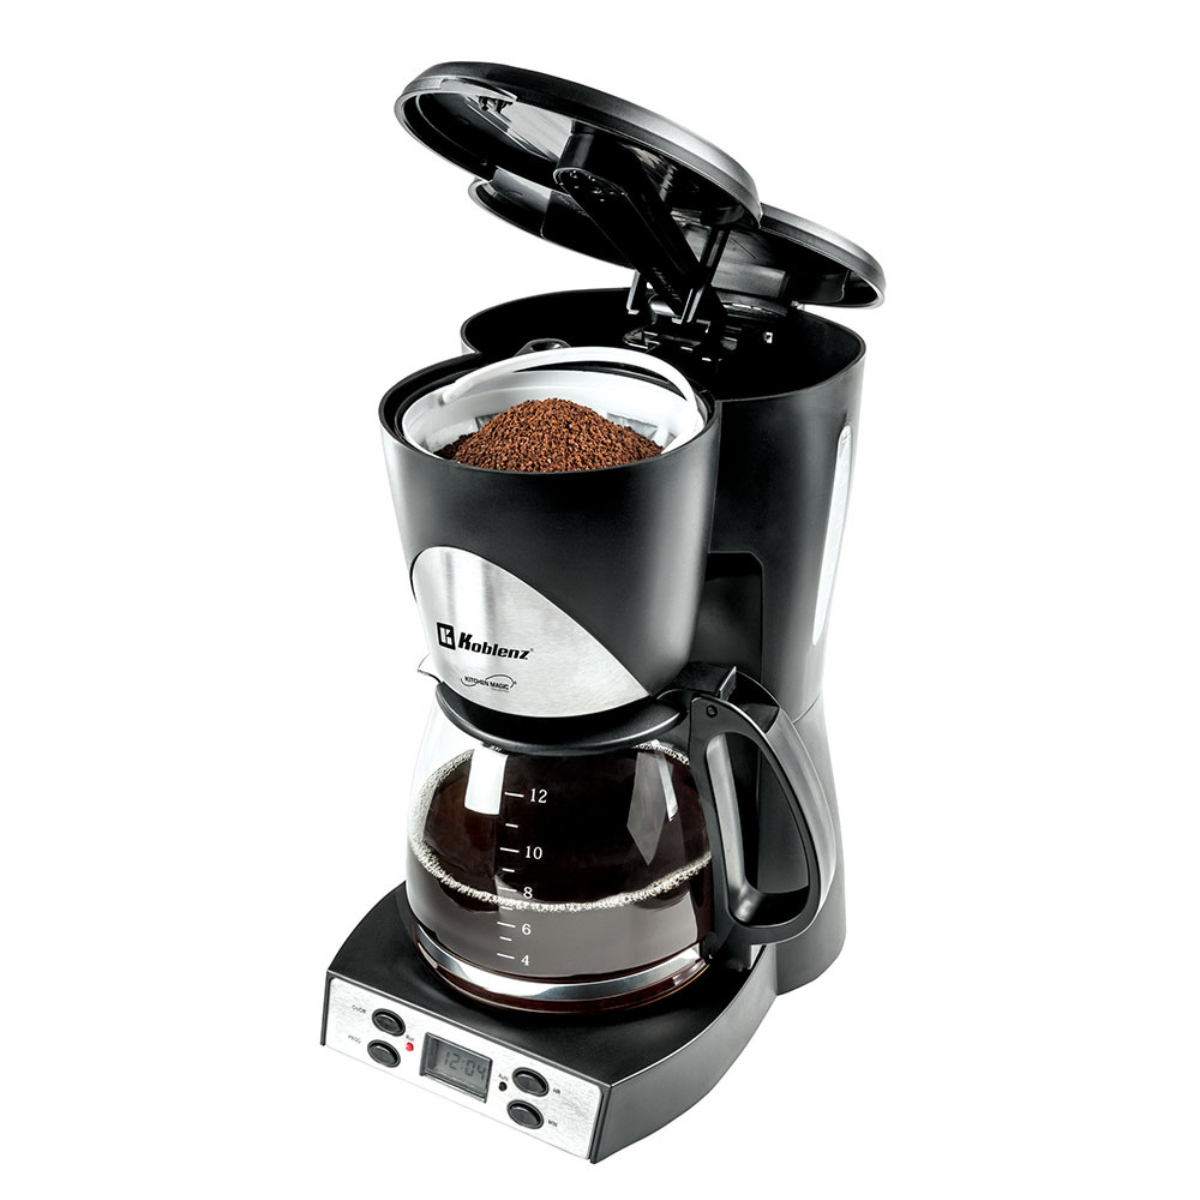 Programmable Drip Coffee Maker - CKM-212 PIN